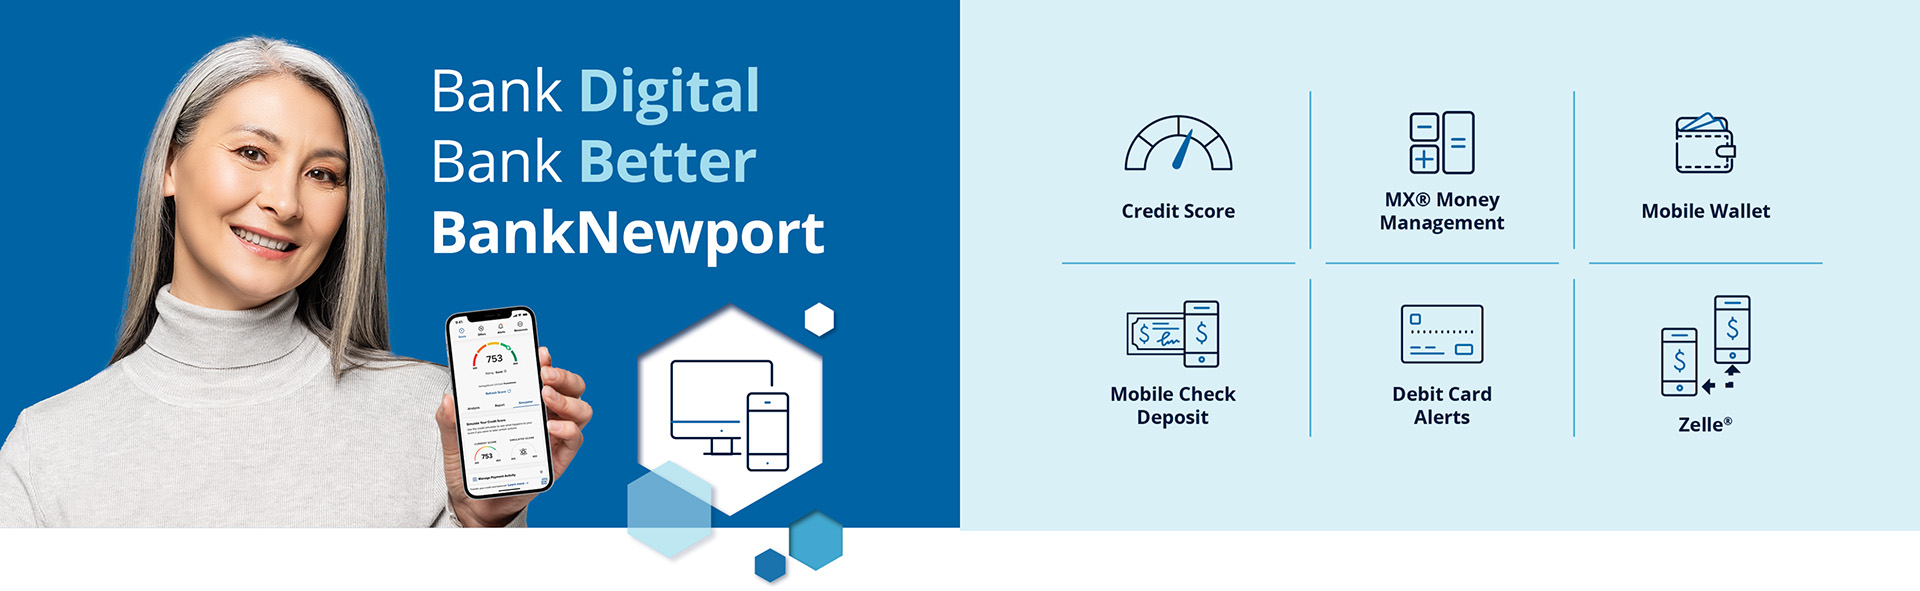 banknewport-better-digital-desktop